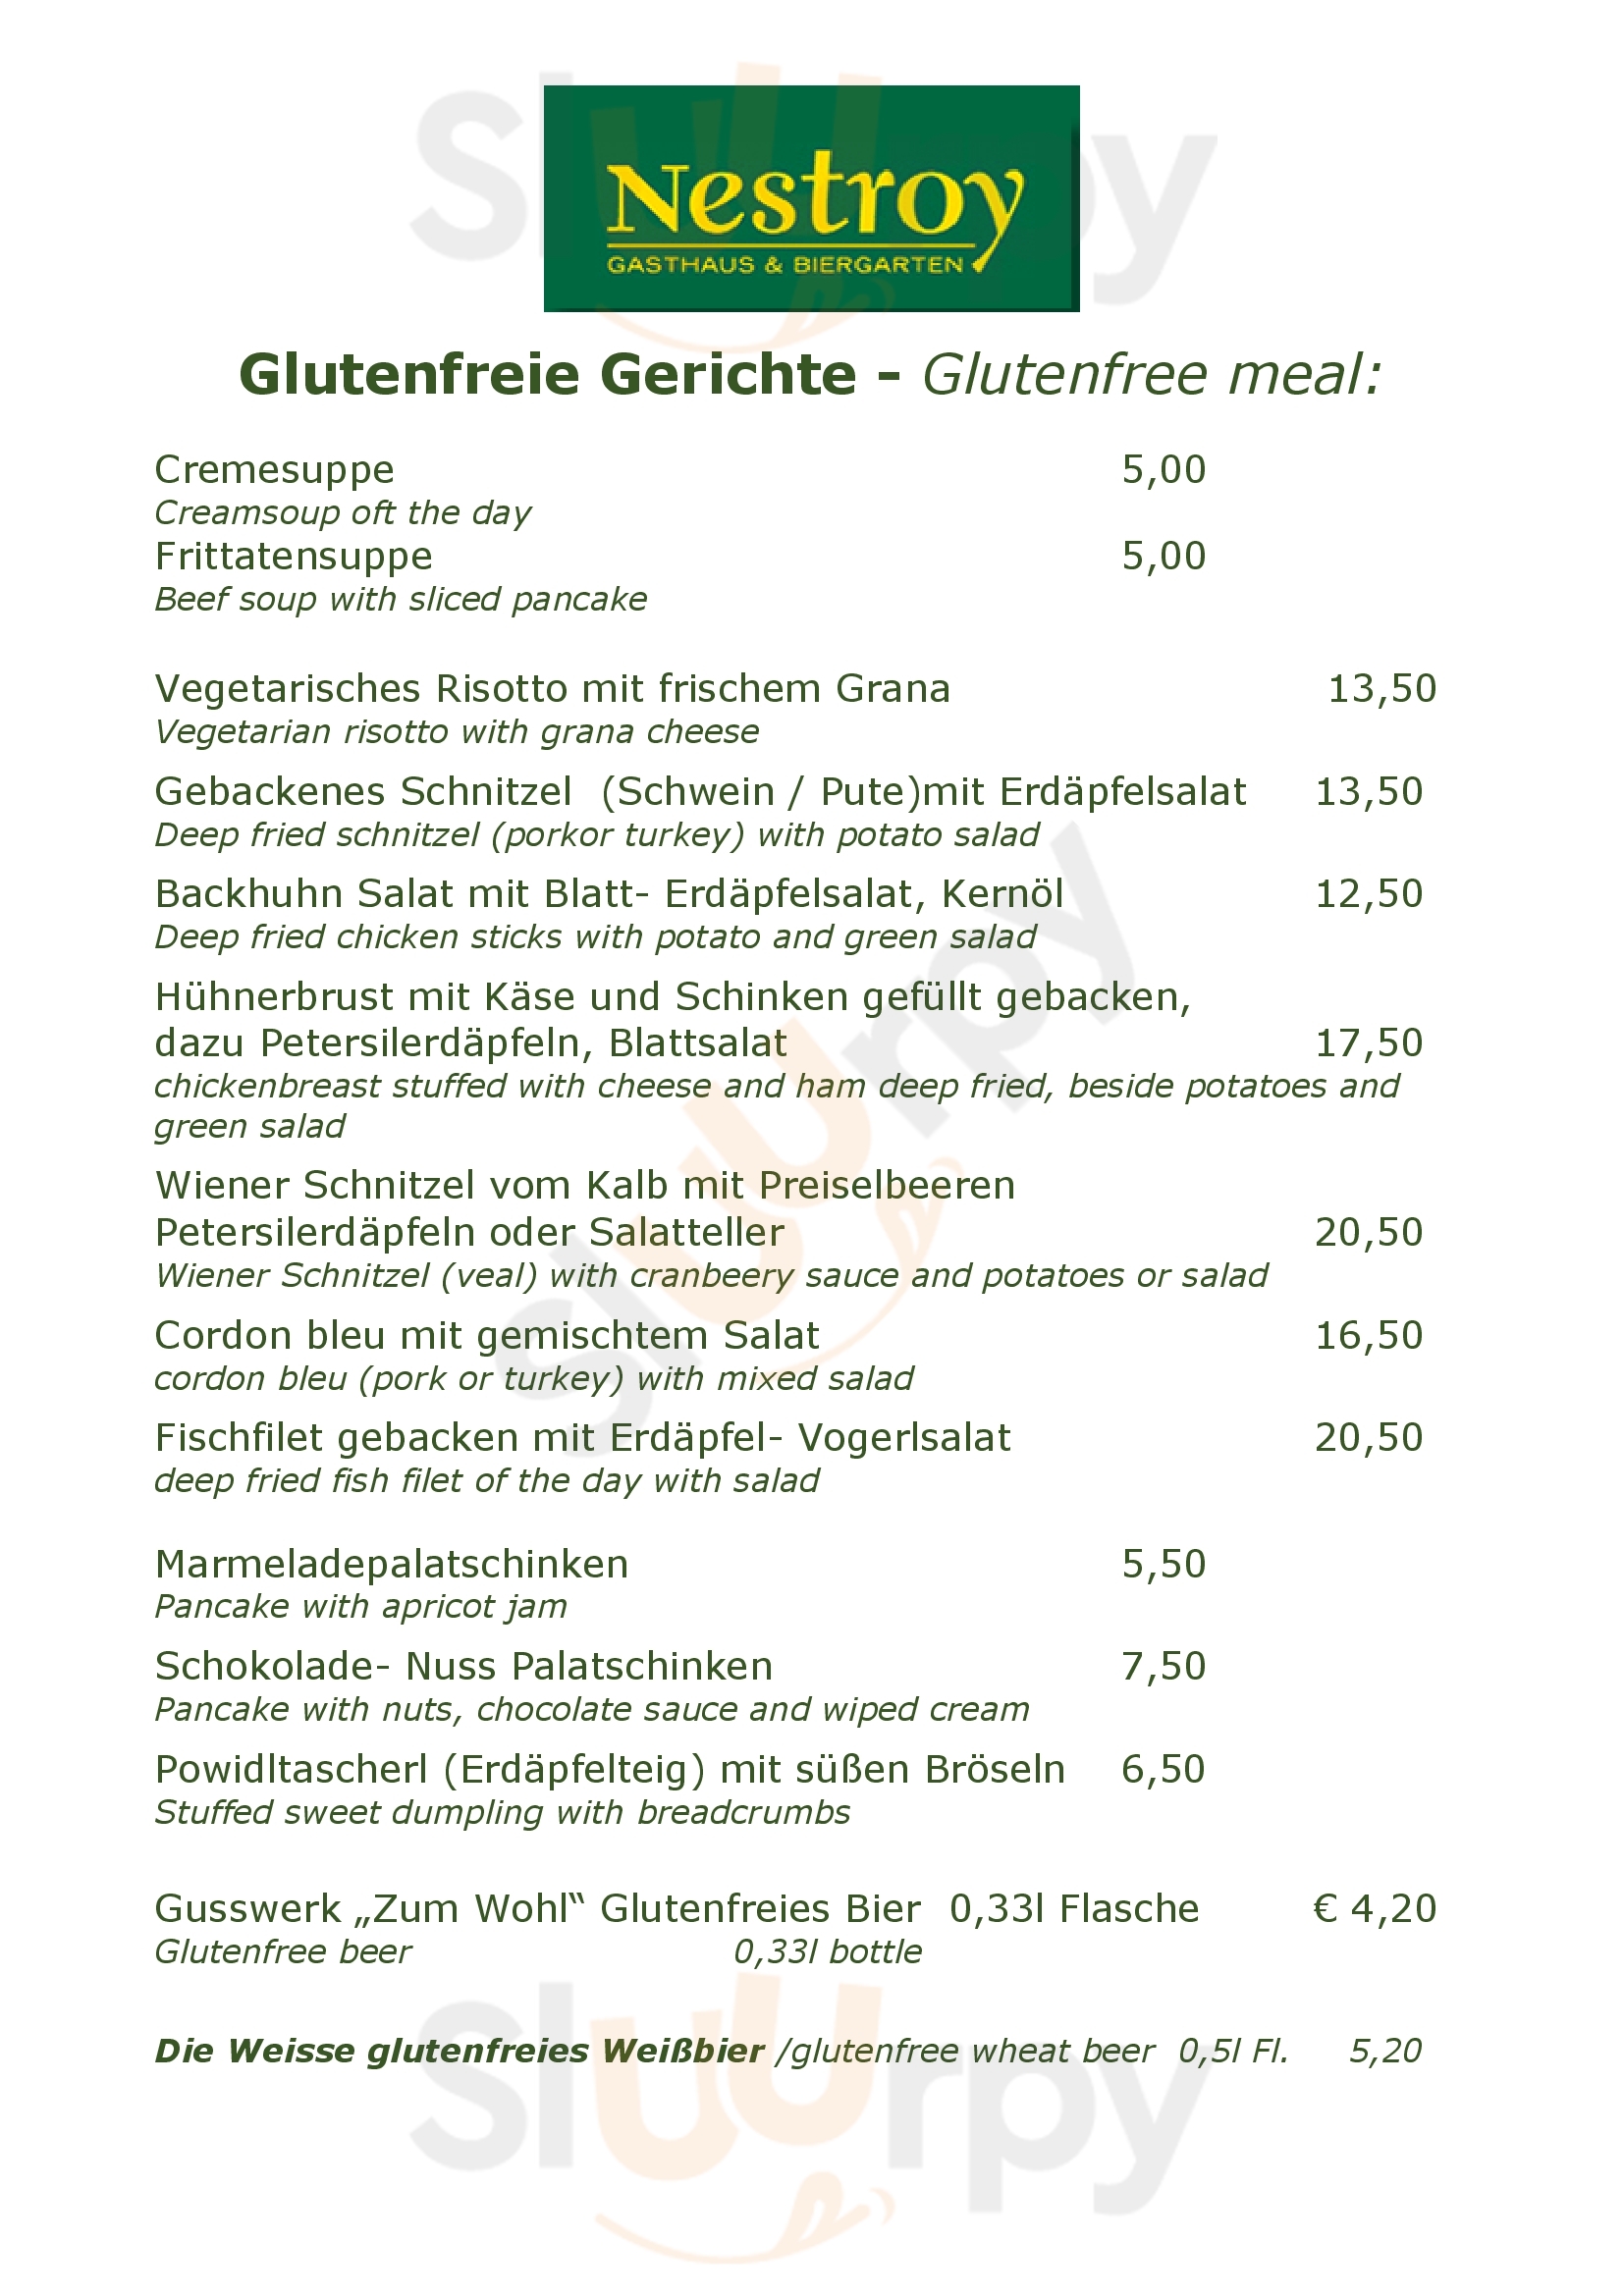 Nestroy Gasthaus & Biergarten Wien Menu - 1